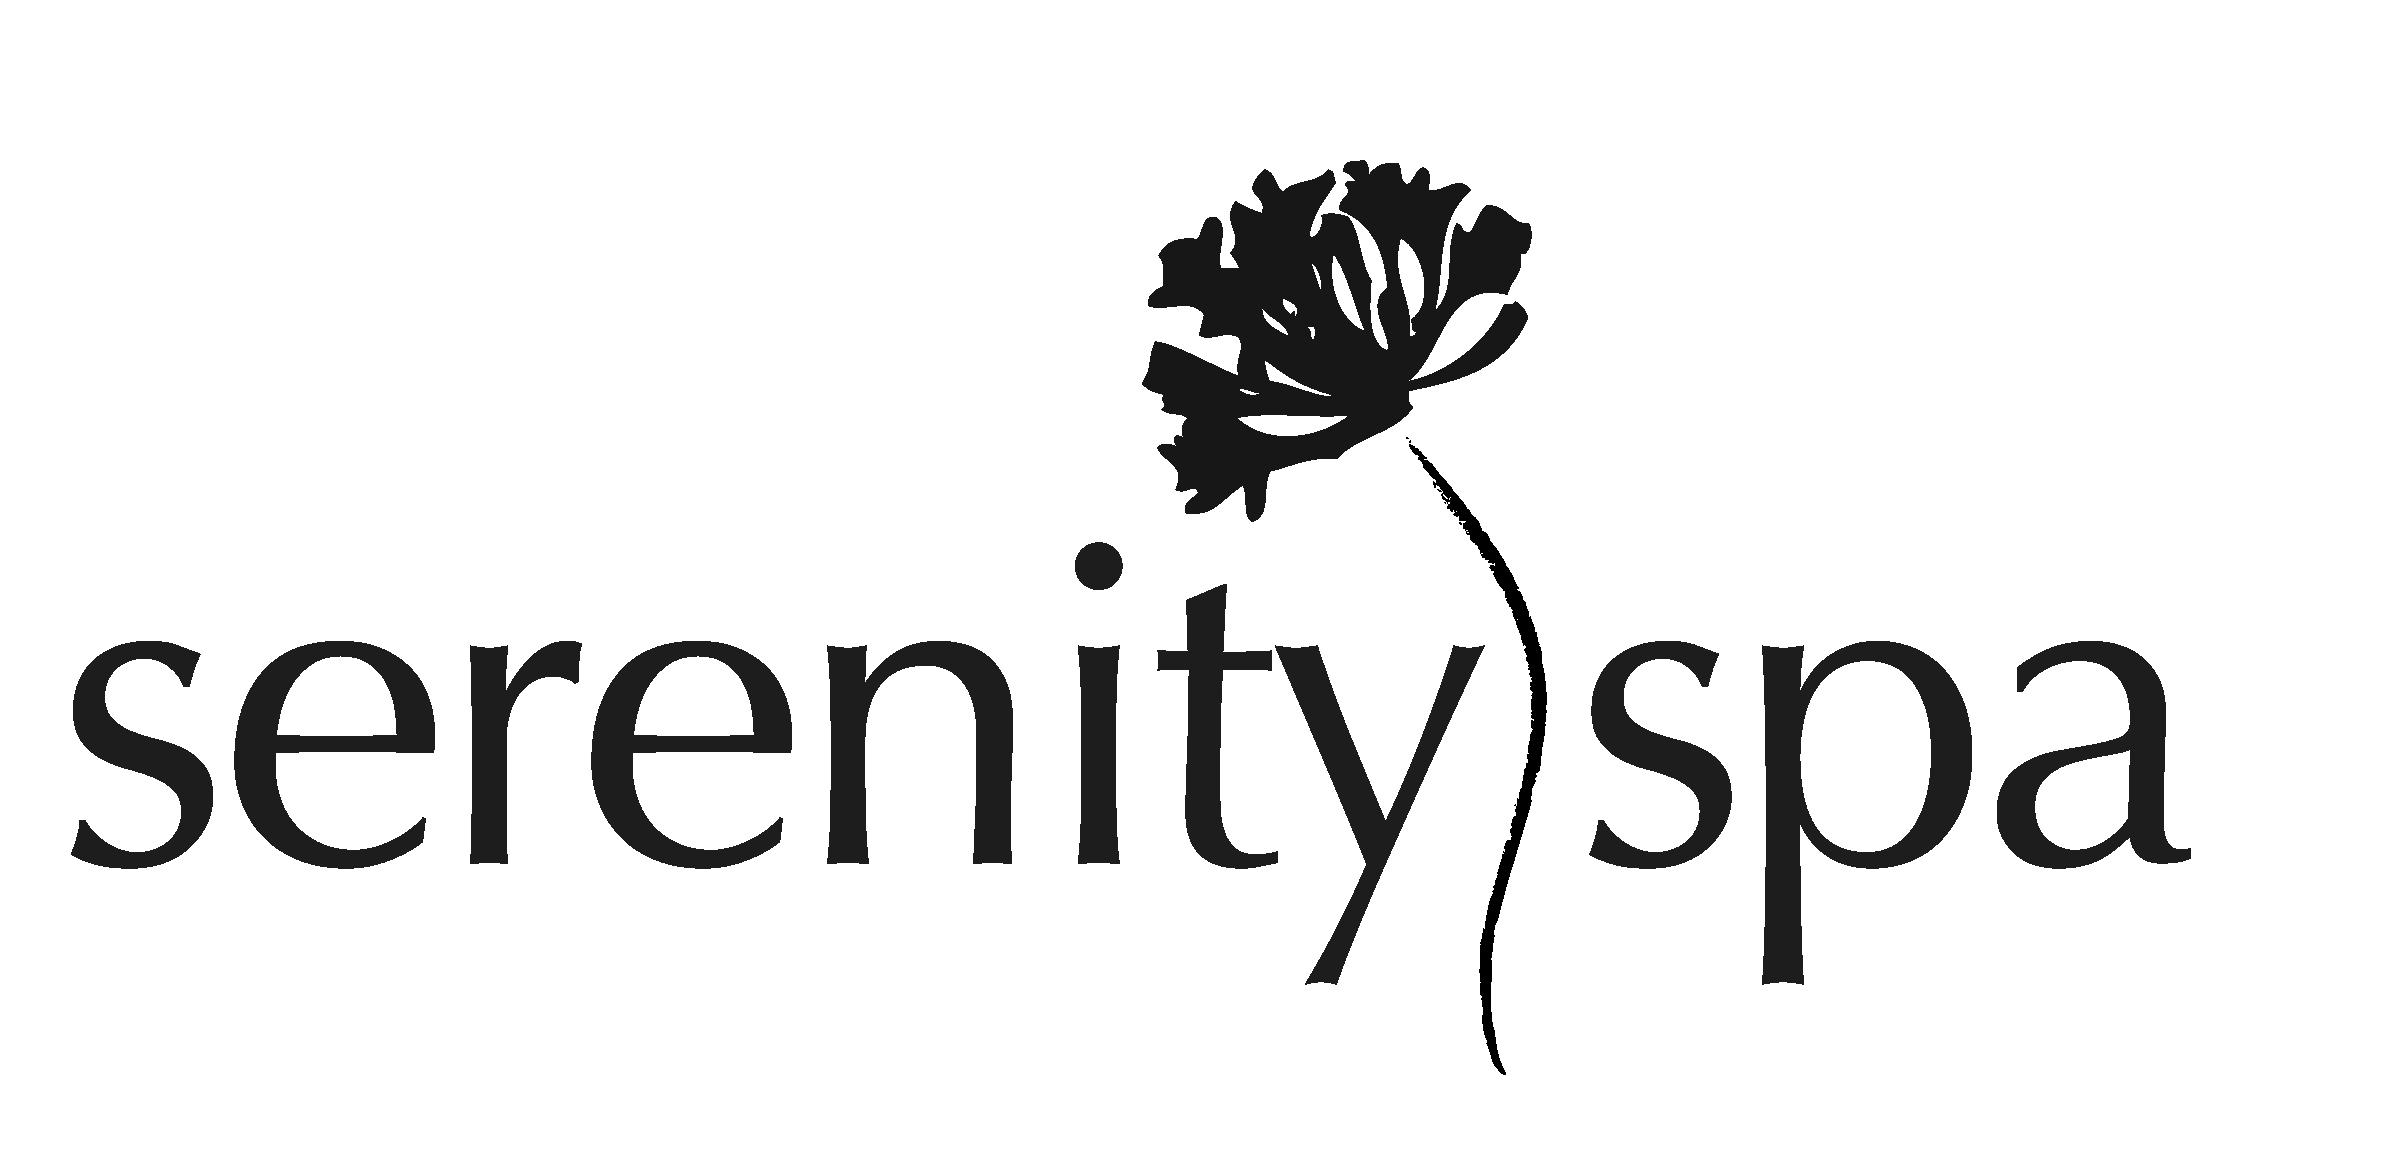 logo serenity by jan